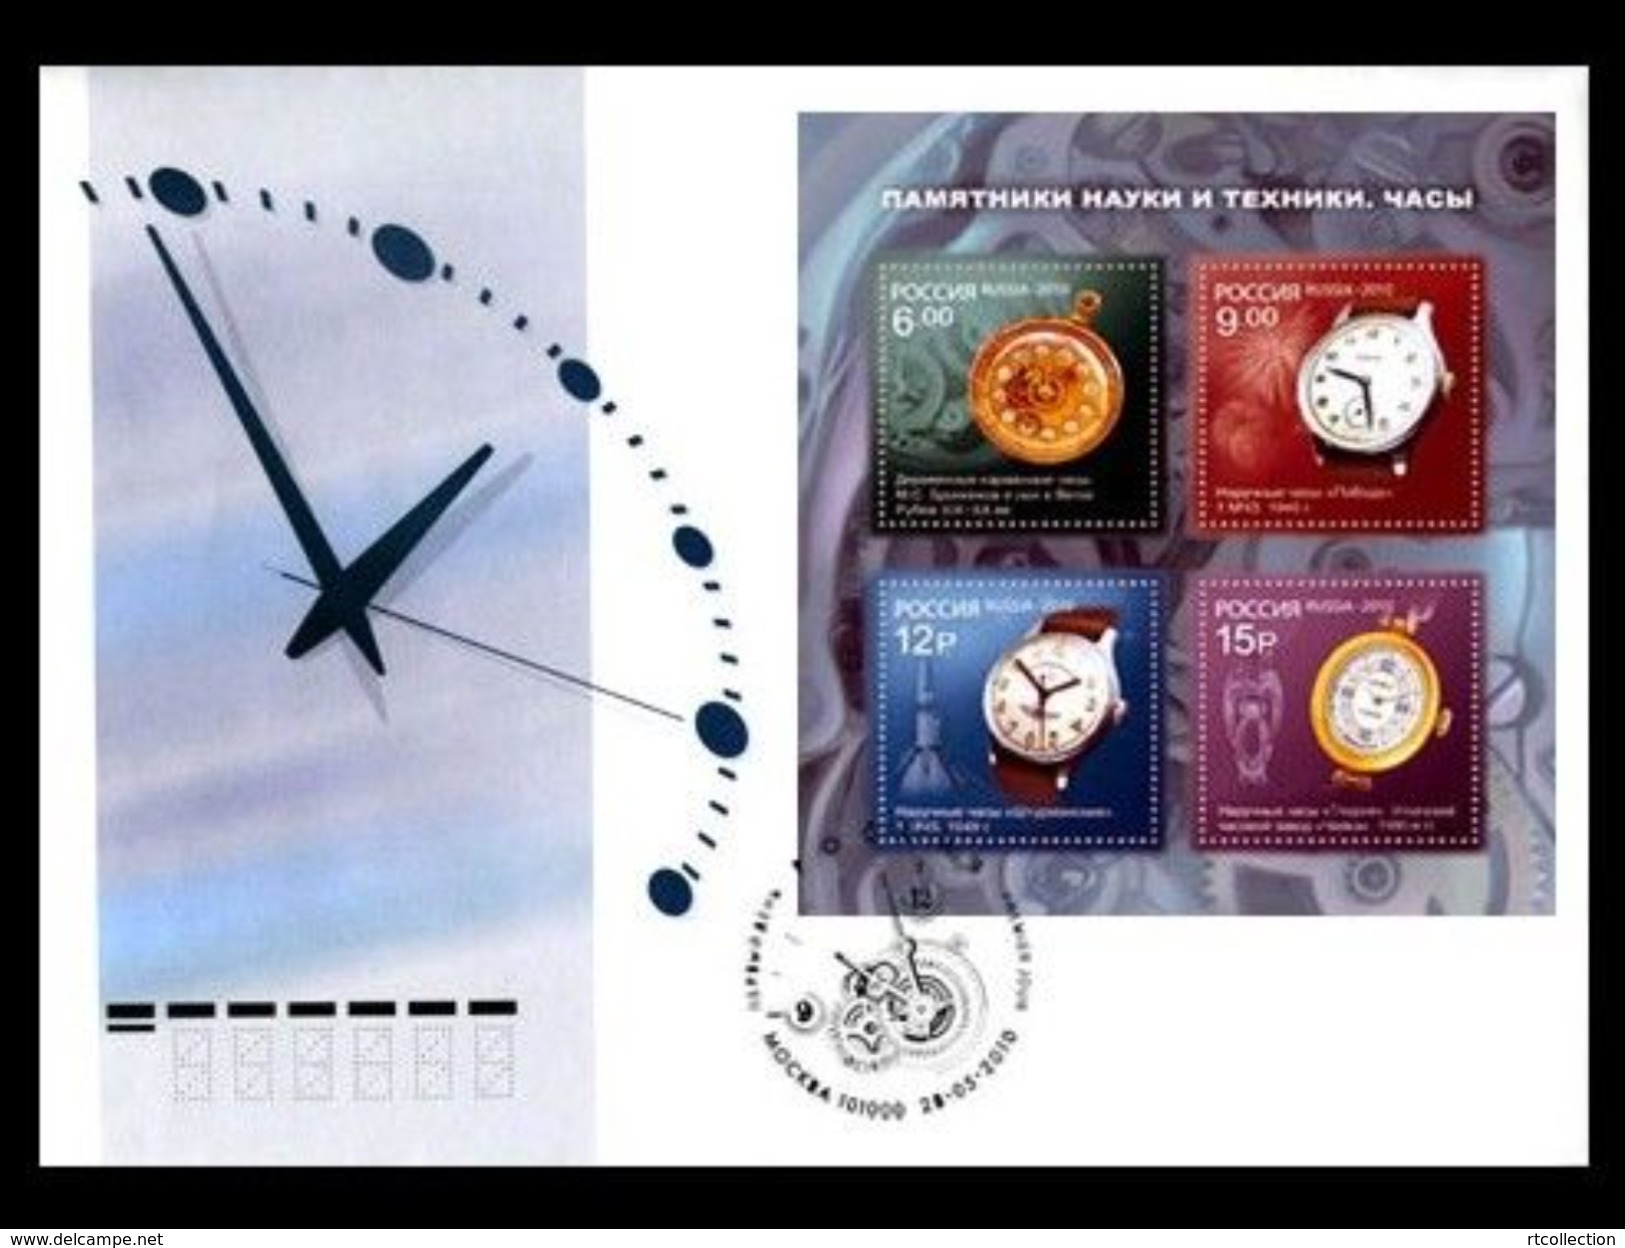 Russia 2010 Souvenir Pack FDC S/S Monuments Sciences Technology Watches Wrist Clock Artifact Stamps Michel BL134 SC 7216 - Sammlungen